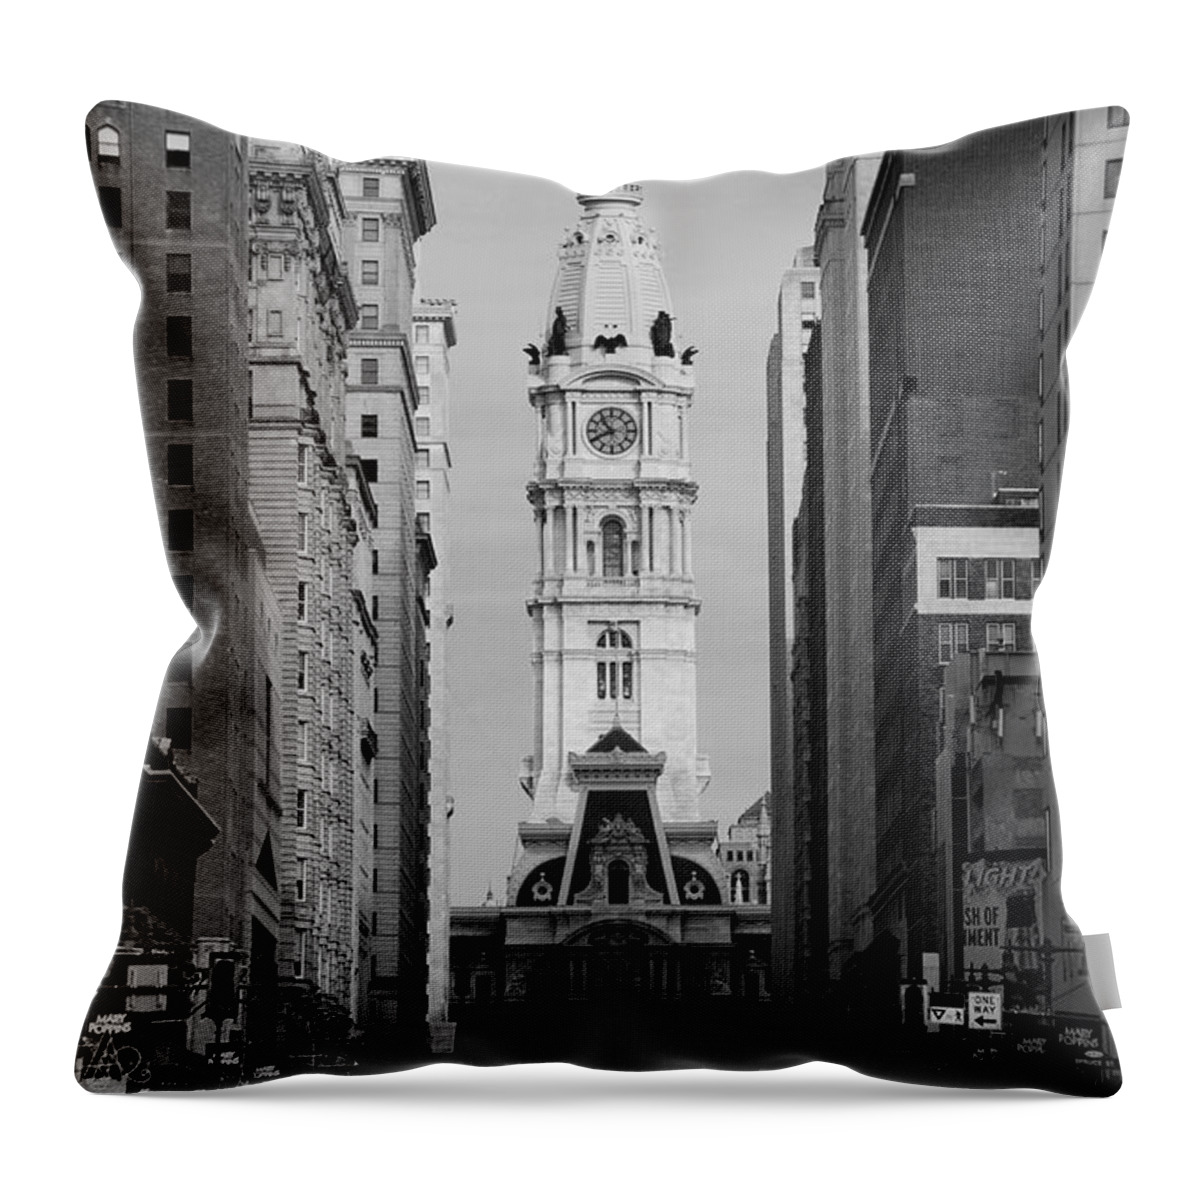 Philadelphia Throw Pillow featuring the photograph City Hall b/w by Jennifer Ancker